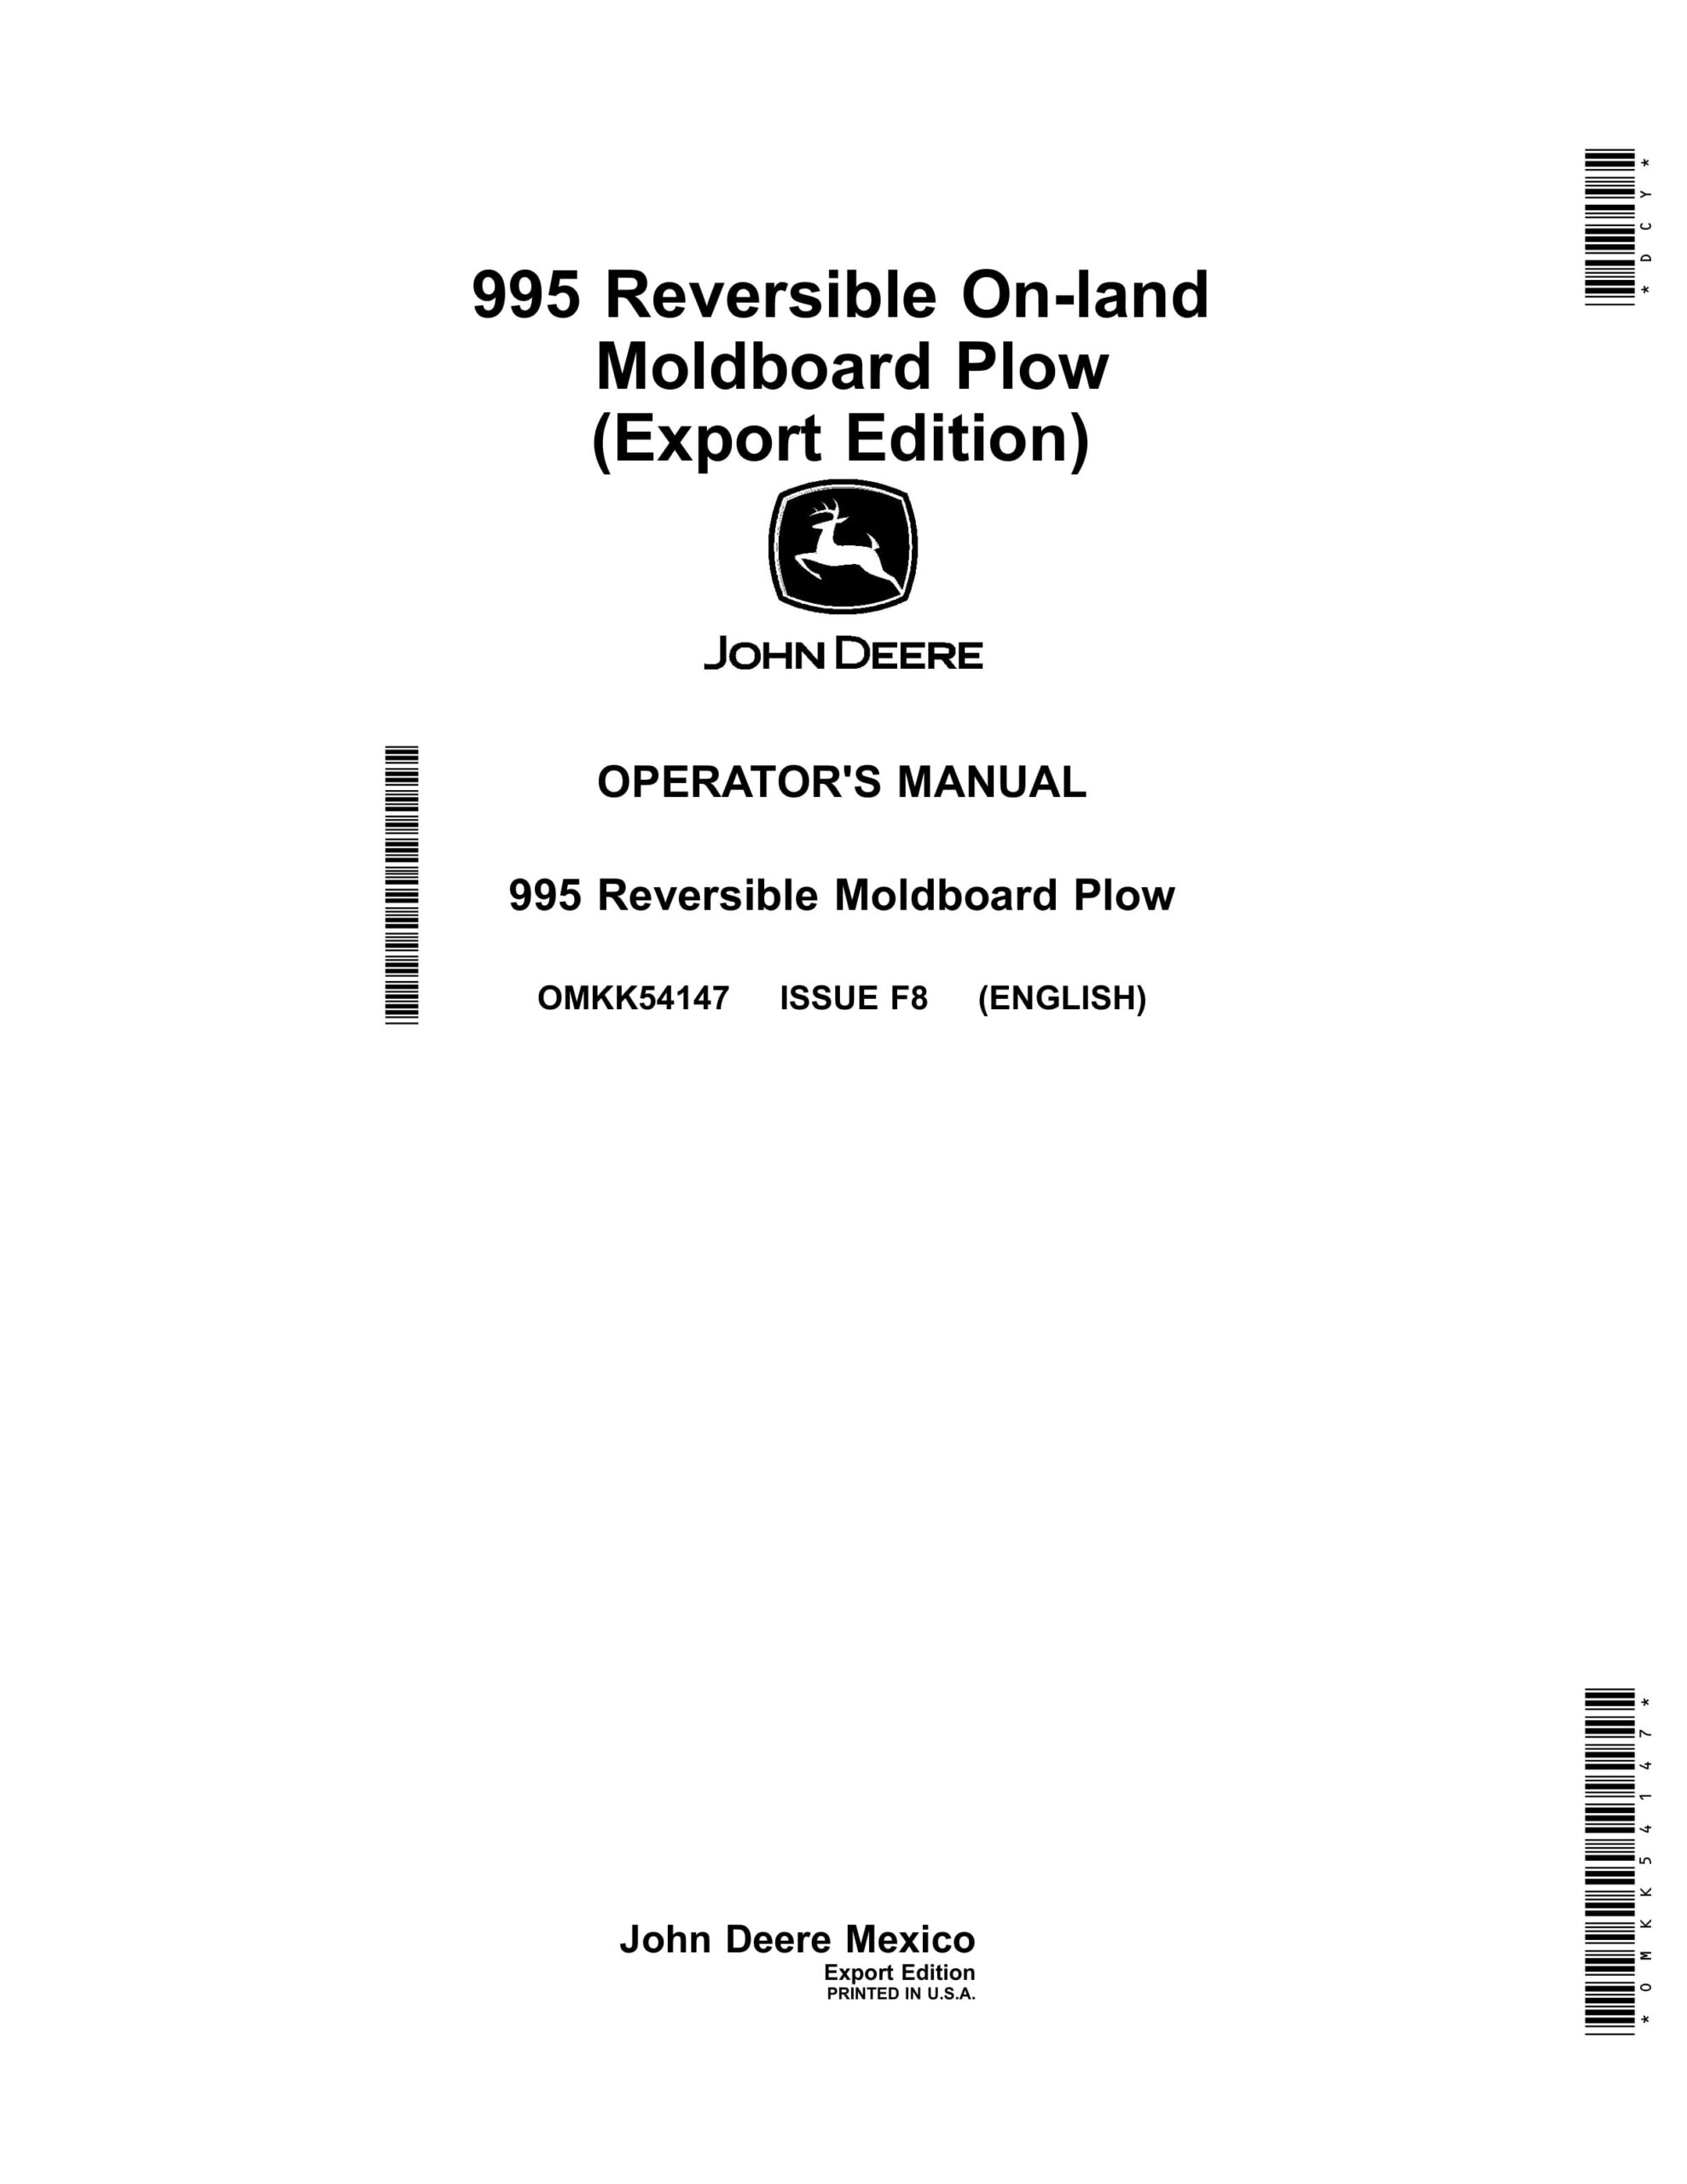 John Deere 995 Reversible On-land Operator Manual OMKK54147-1